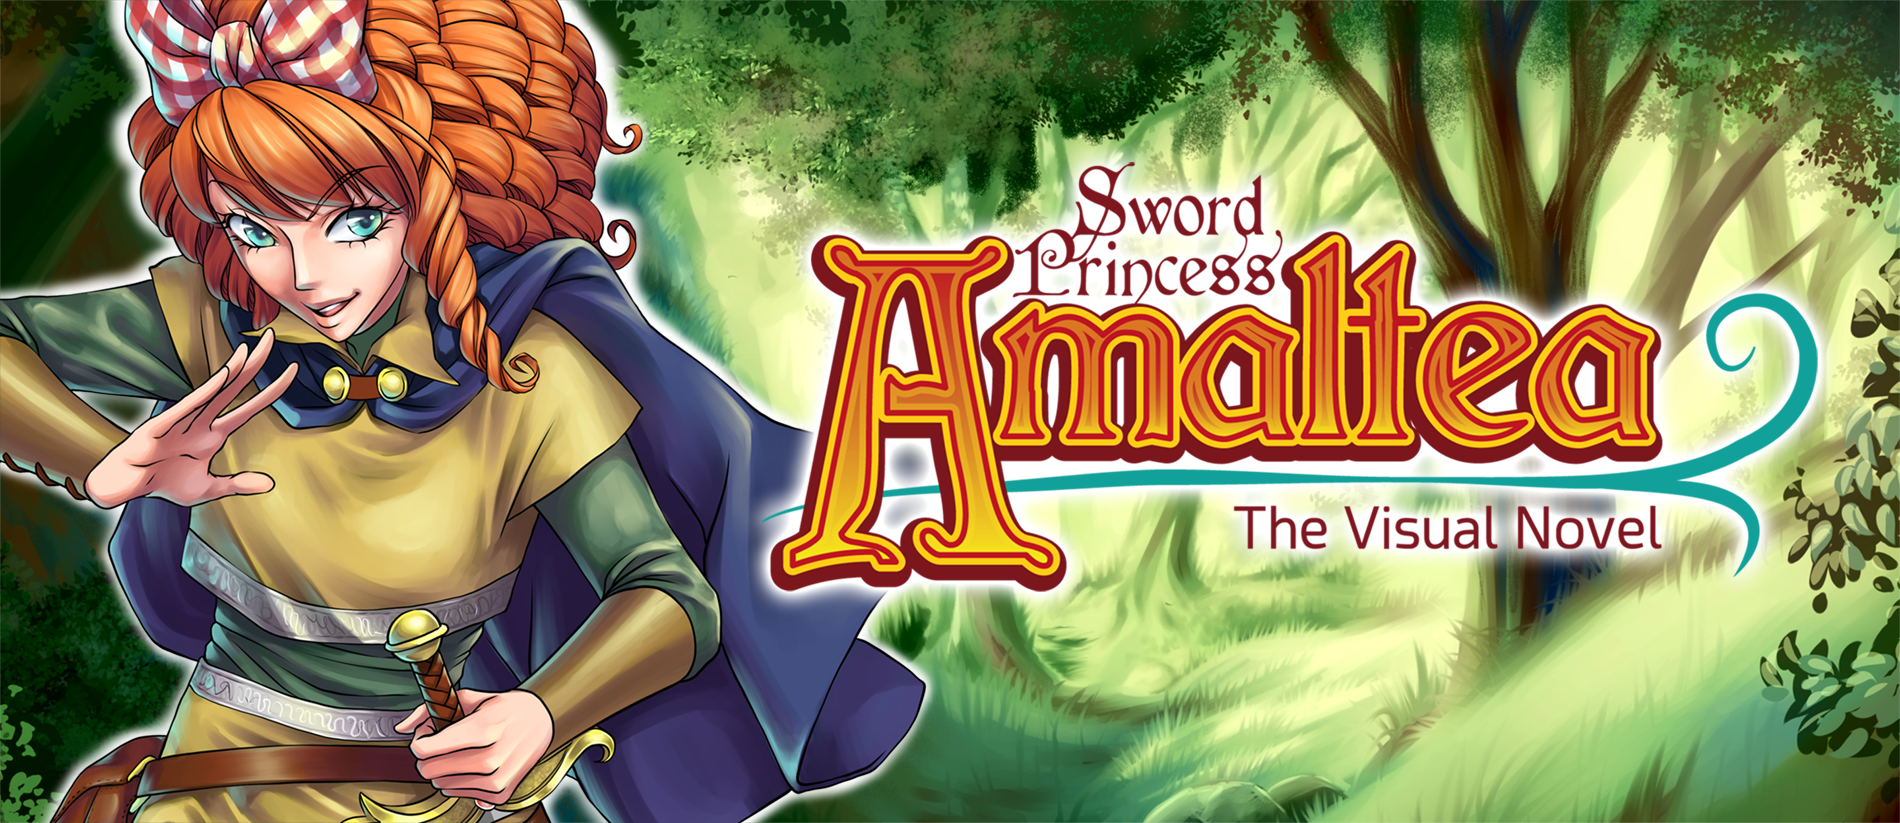 Sword princess amaltea - the visual novel mac os 11